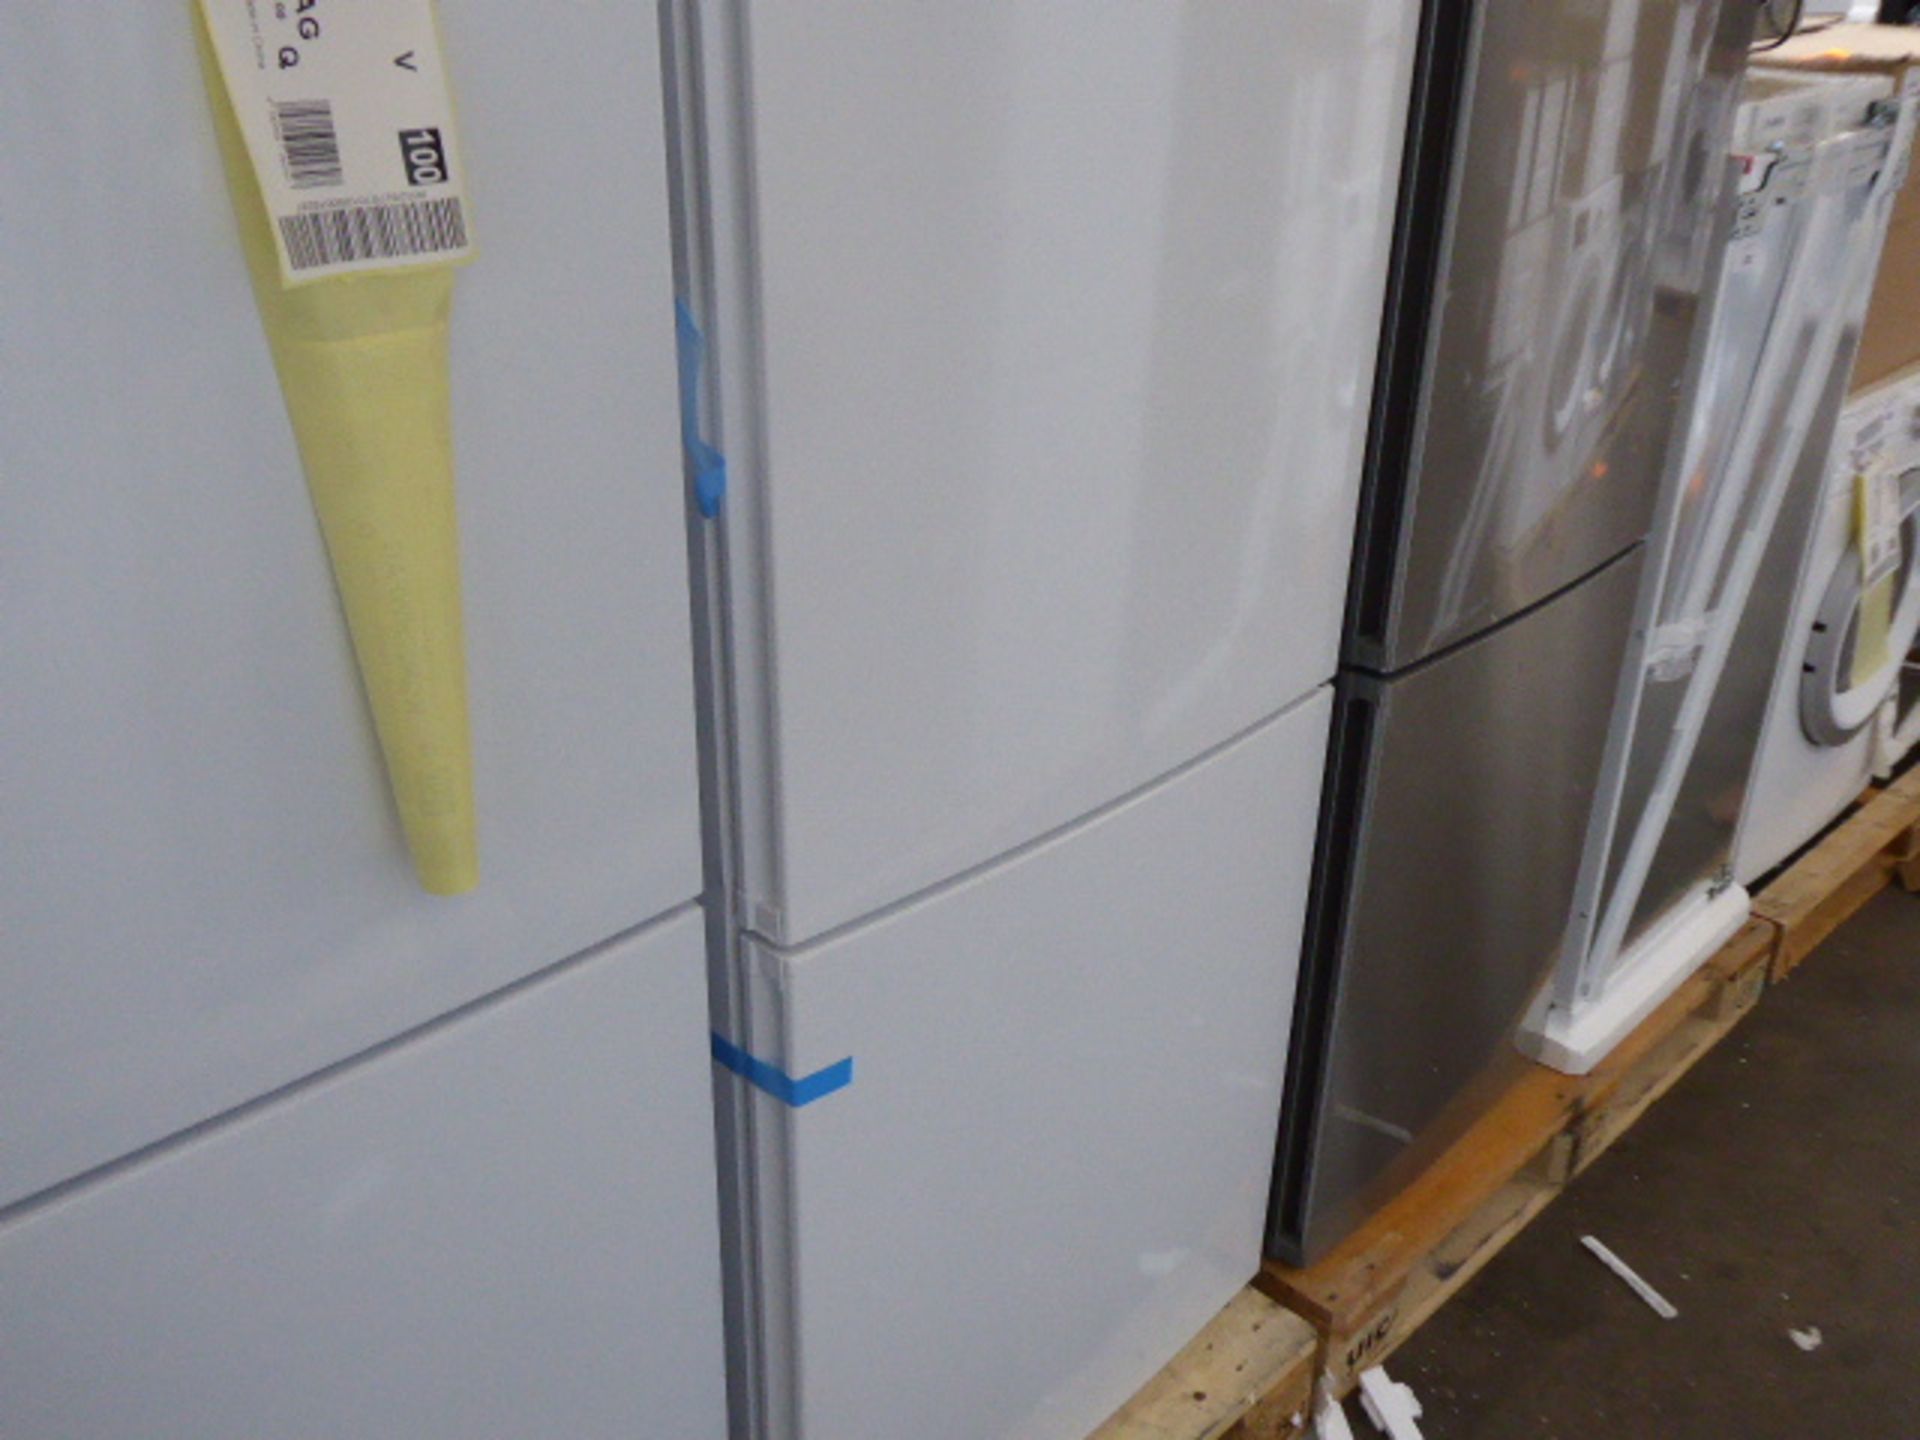 KGN49XWEA-B Bosch Free-standing fridge-freezer - Image 2 of 3